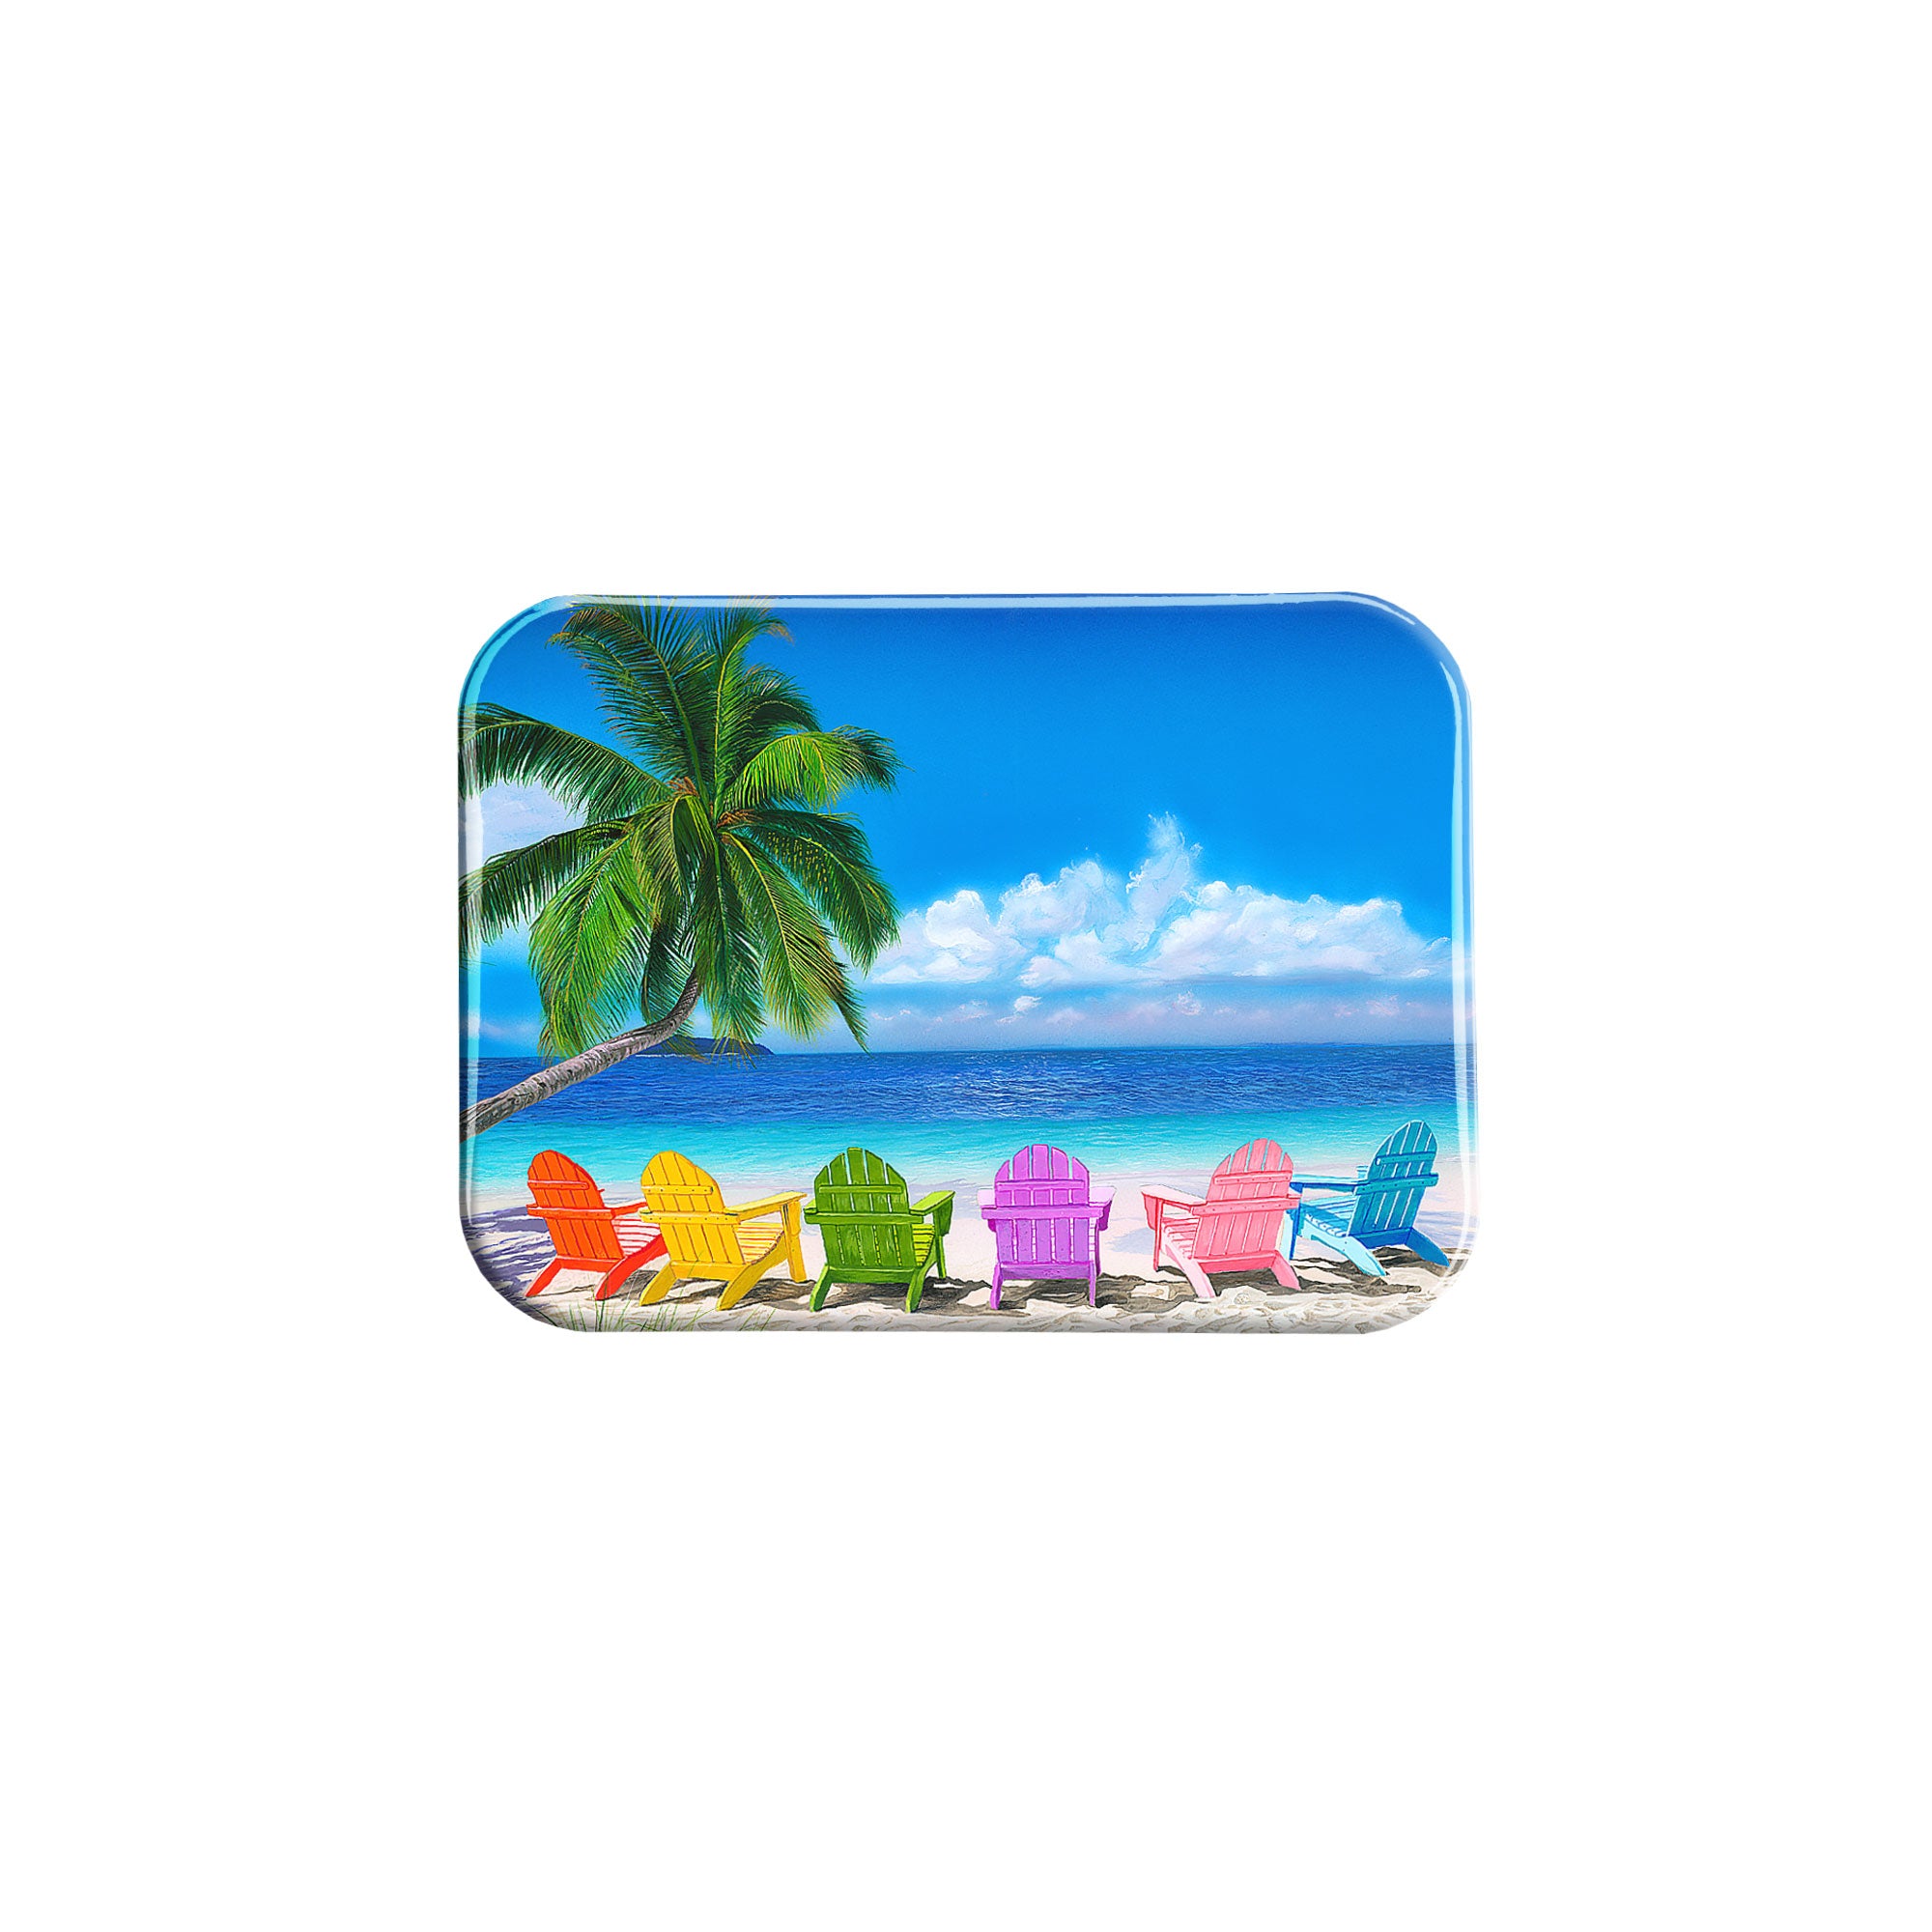 "Beach Chairs" - 2.5" X 3.5" Rectangle Fridge Magnets